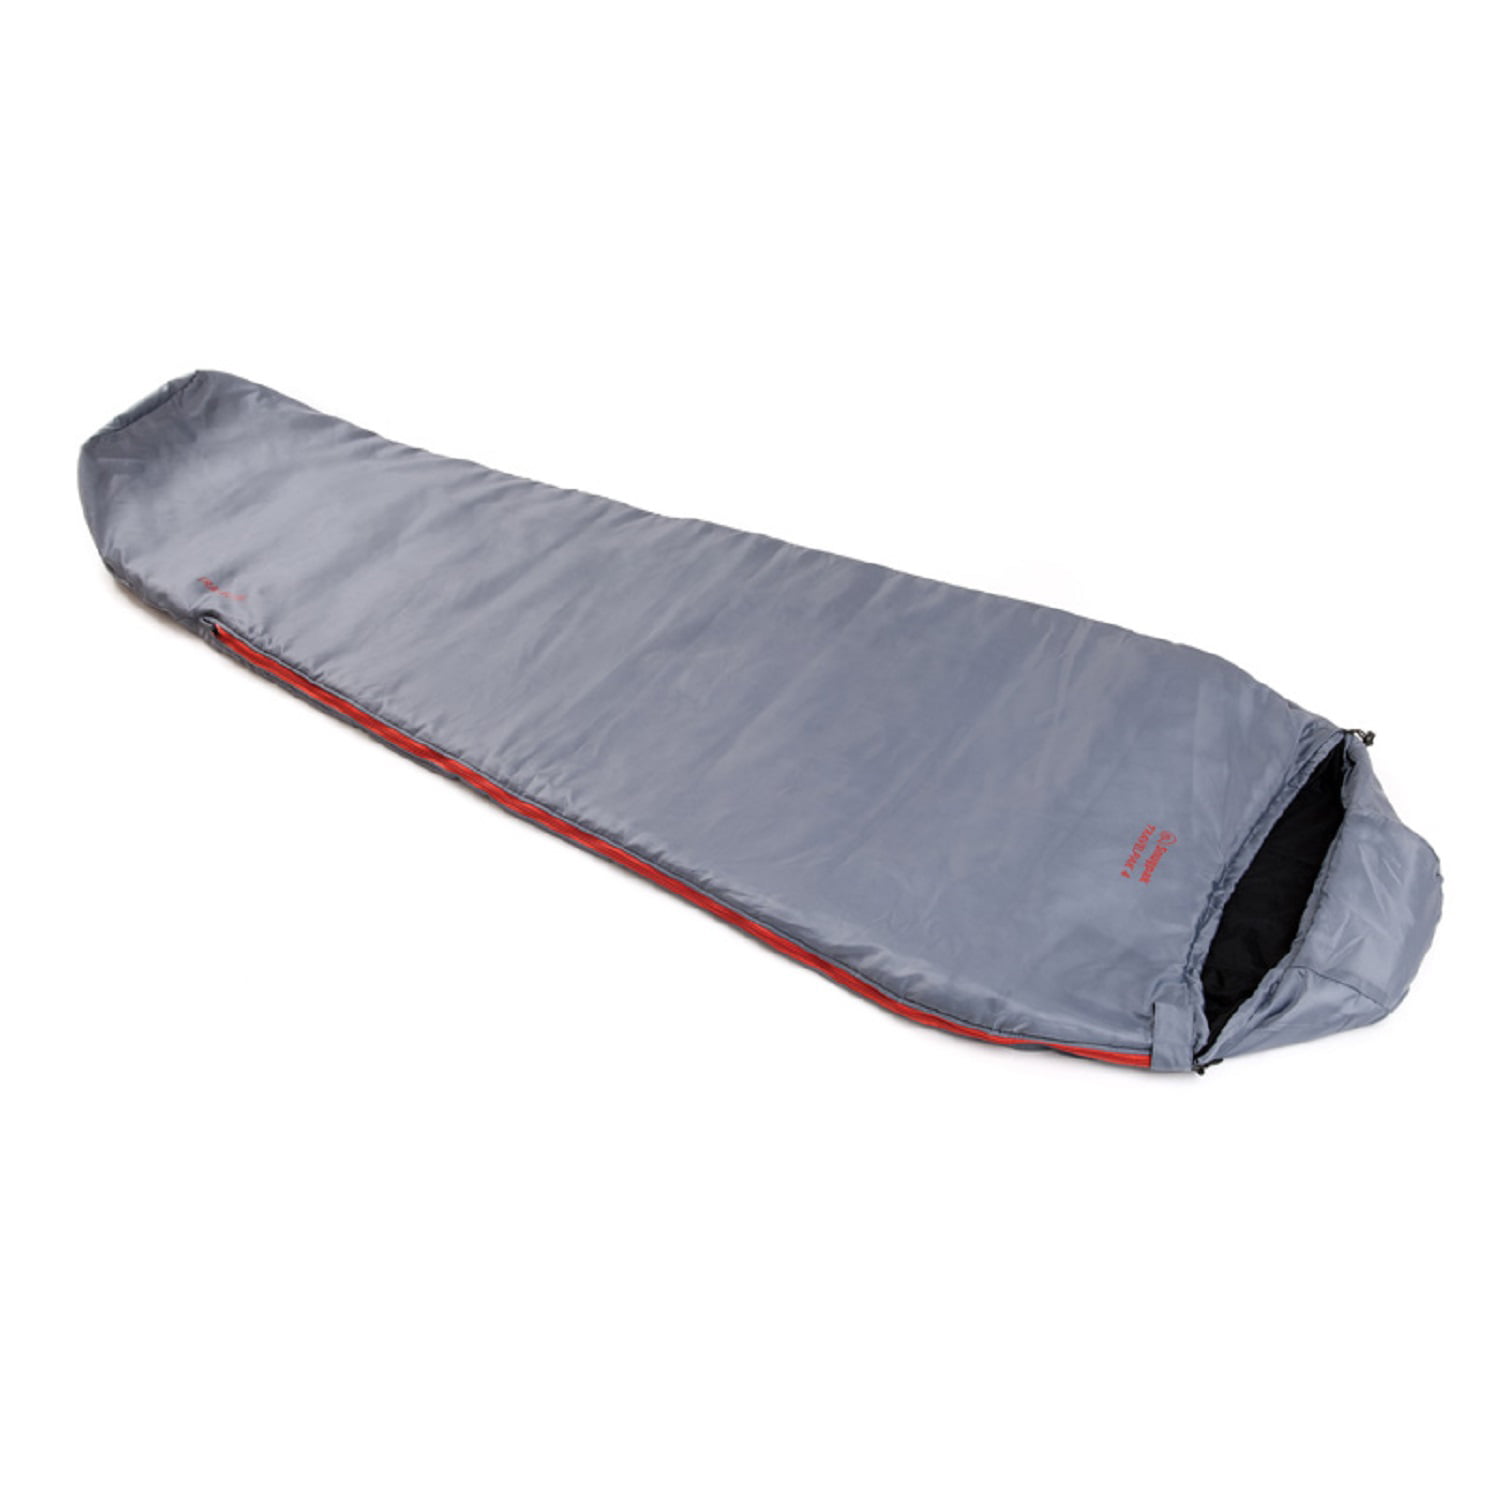 Sleeping Bag with Built in Mosquito Net & antibacterial fabrics Snugpak Travelpak Traveller